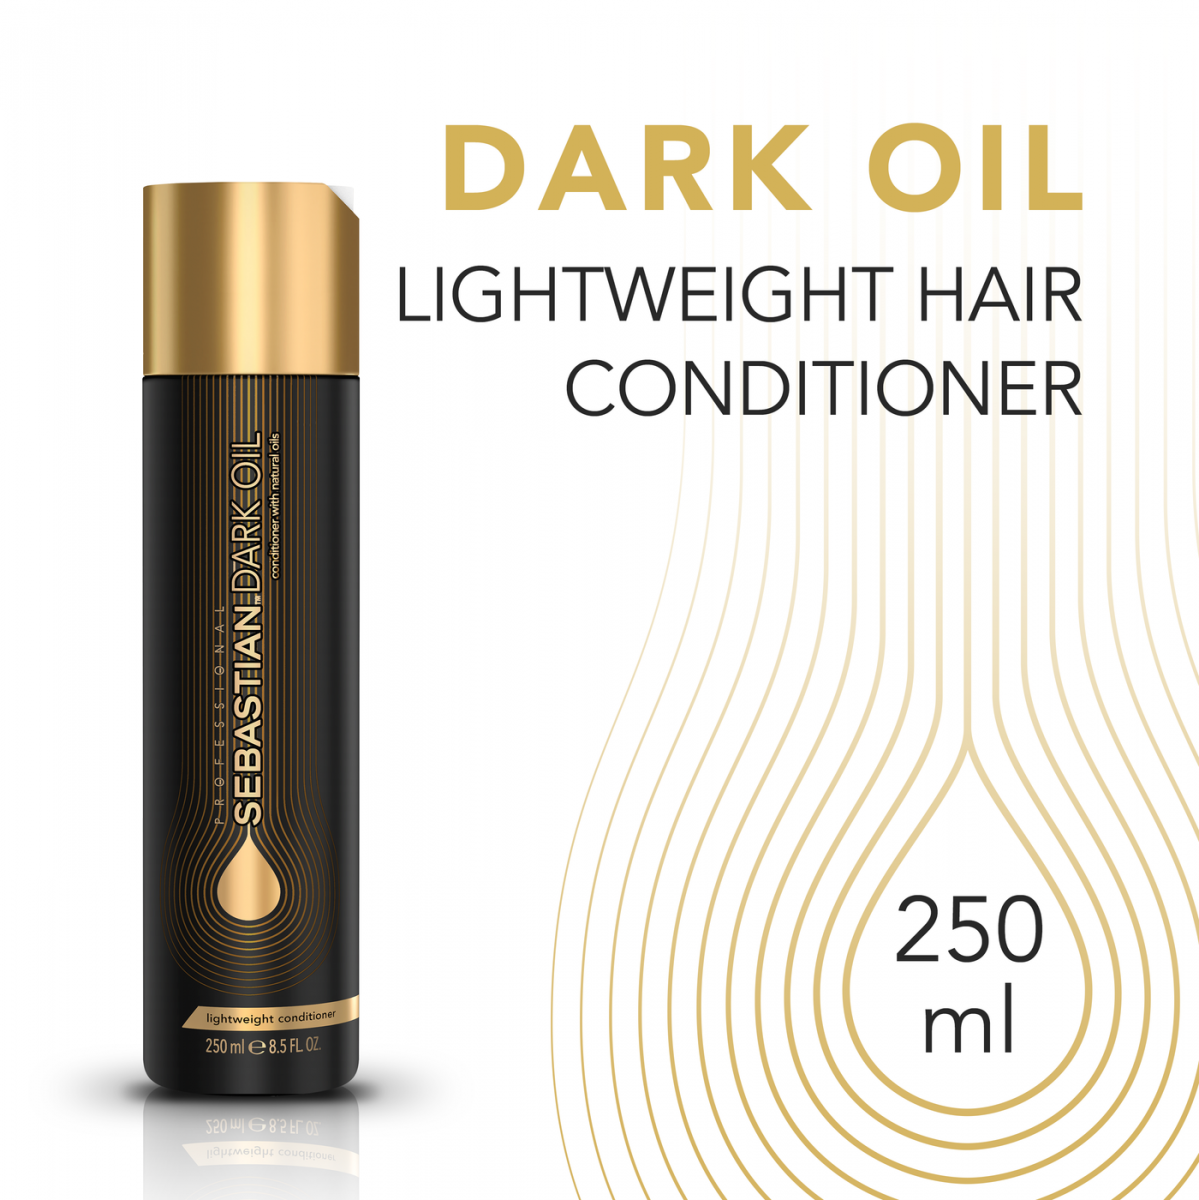 Sebastian Dark Oil Lightweight Hair Conditioner 250 ml - Hairsale.se